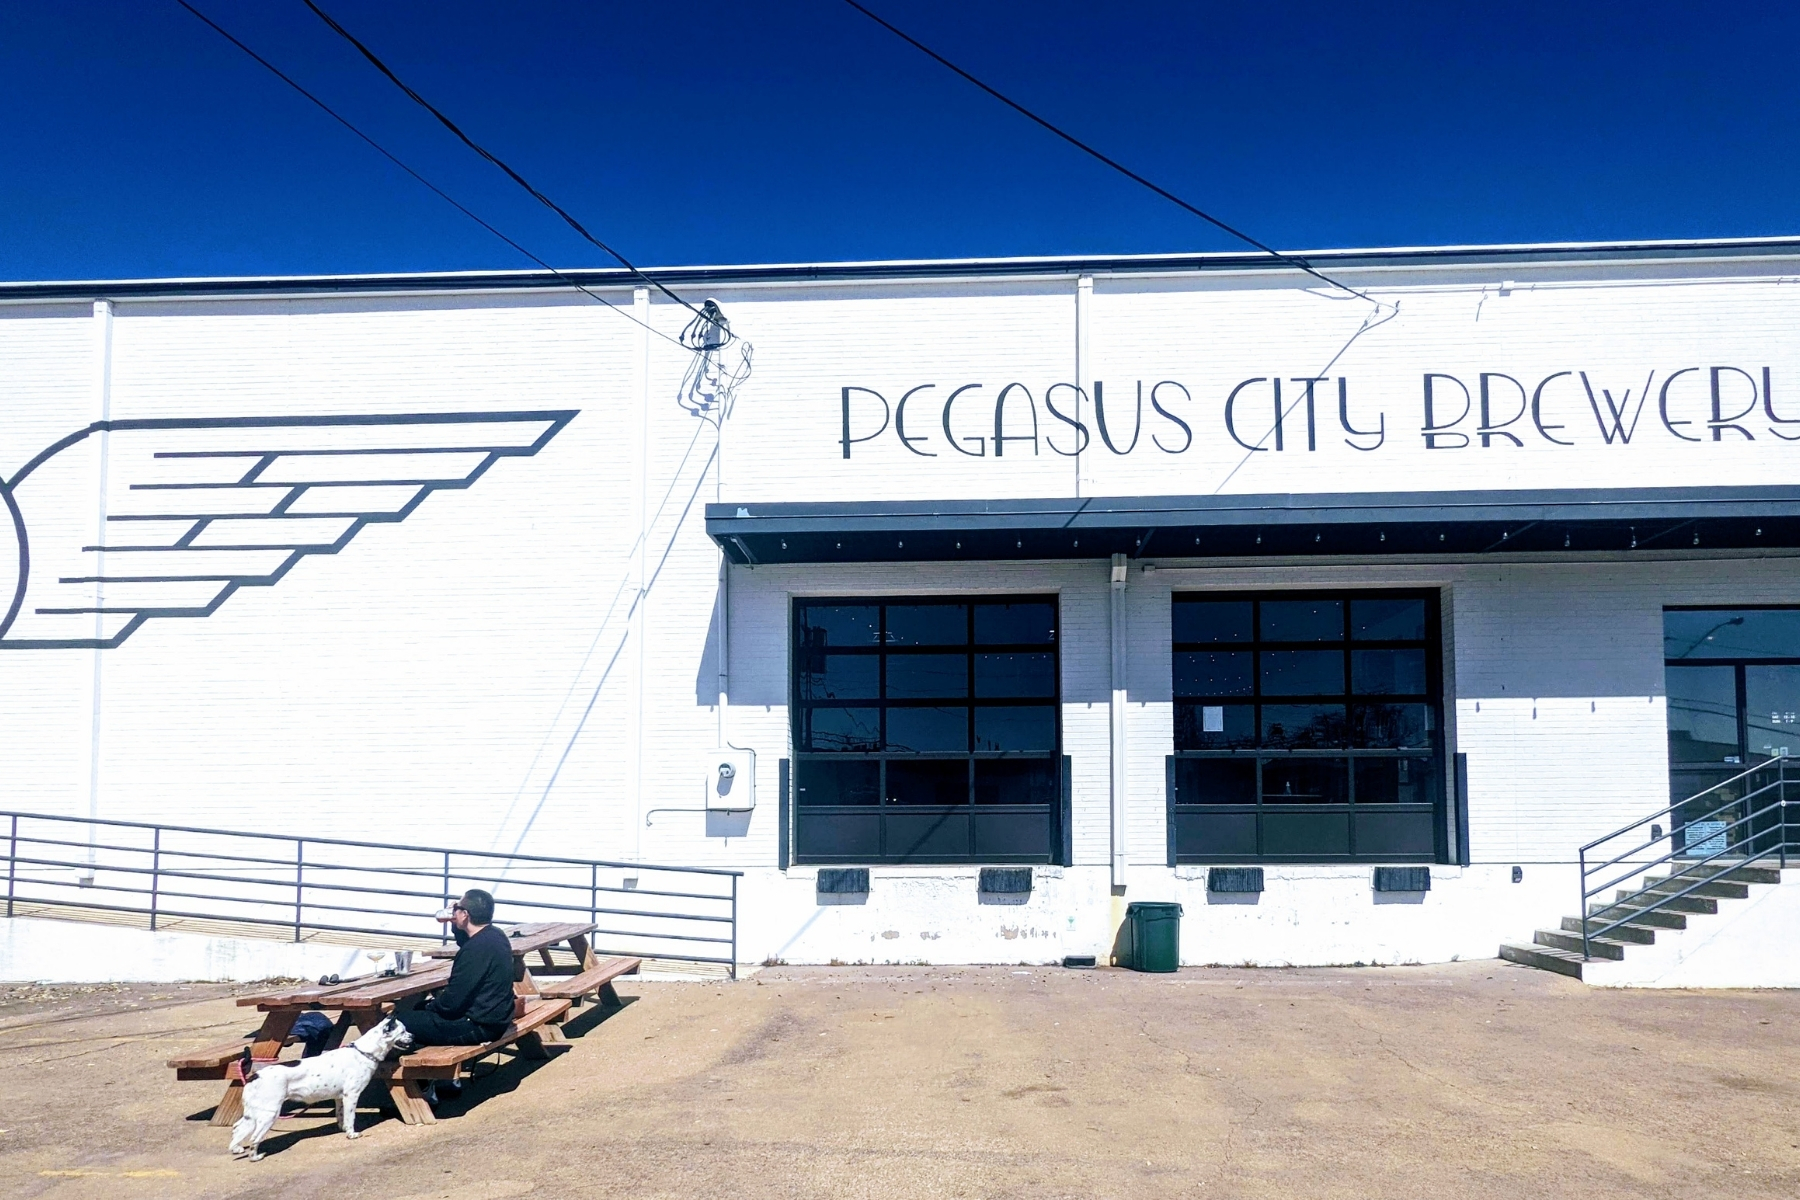 Exterior of Pegasus city Brewing in the Design District in Dallas, Texas.